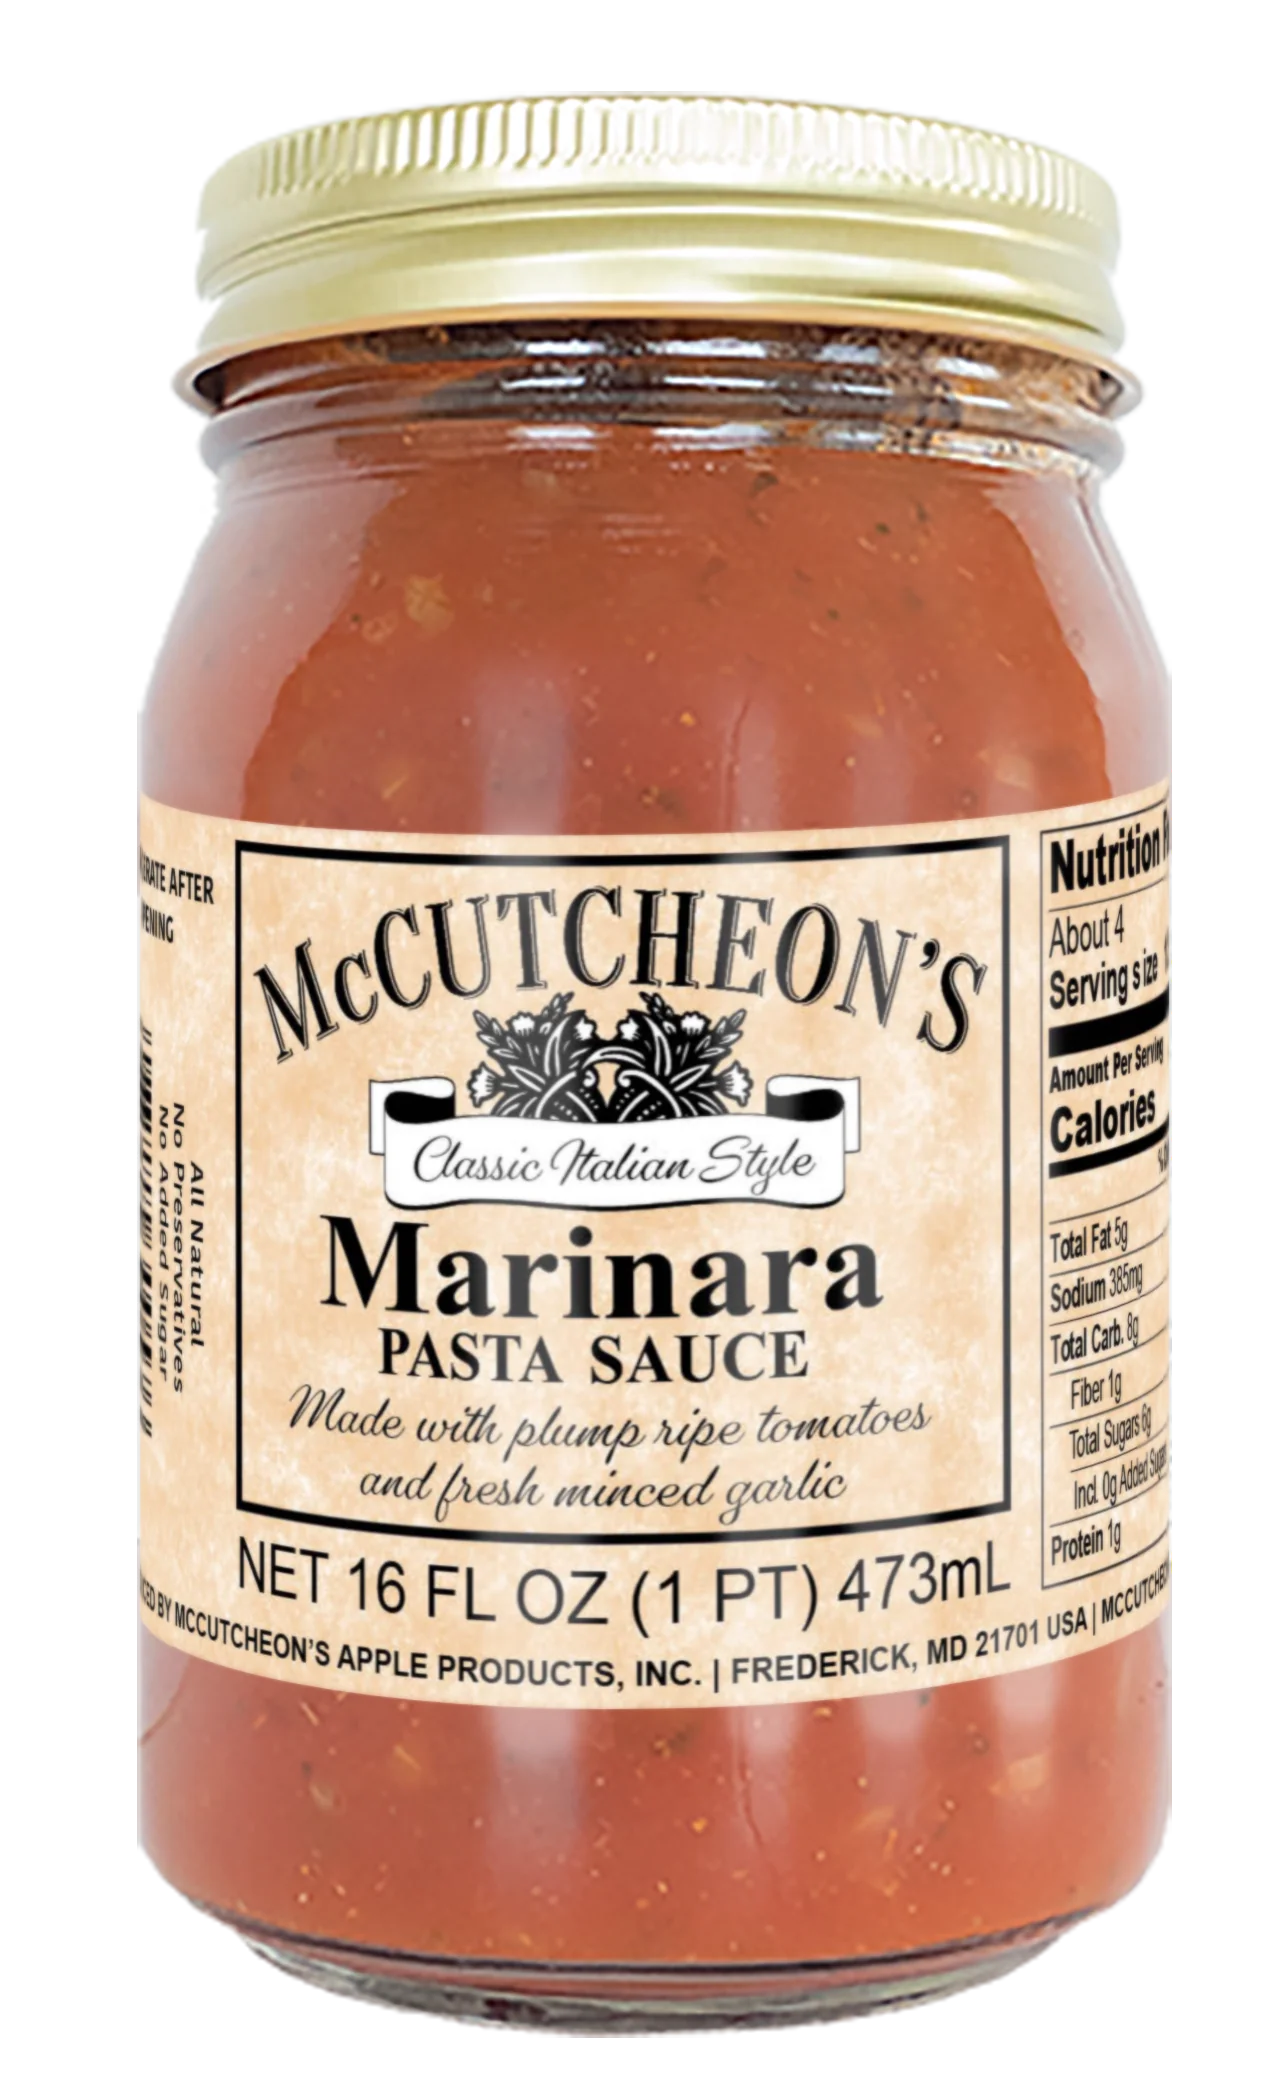 16oz Jar of McCutcheon's Marinara Pasta Sauce